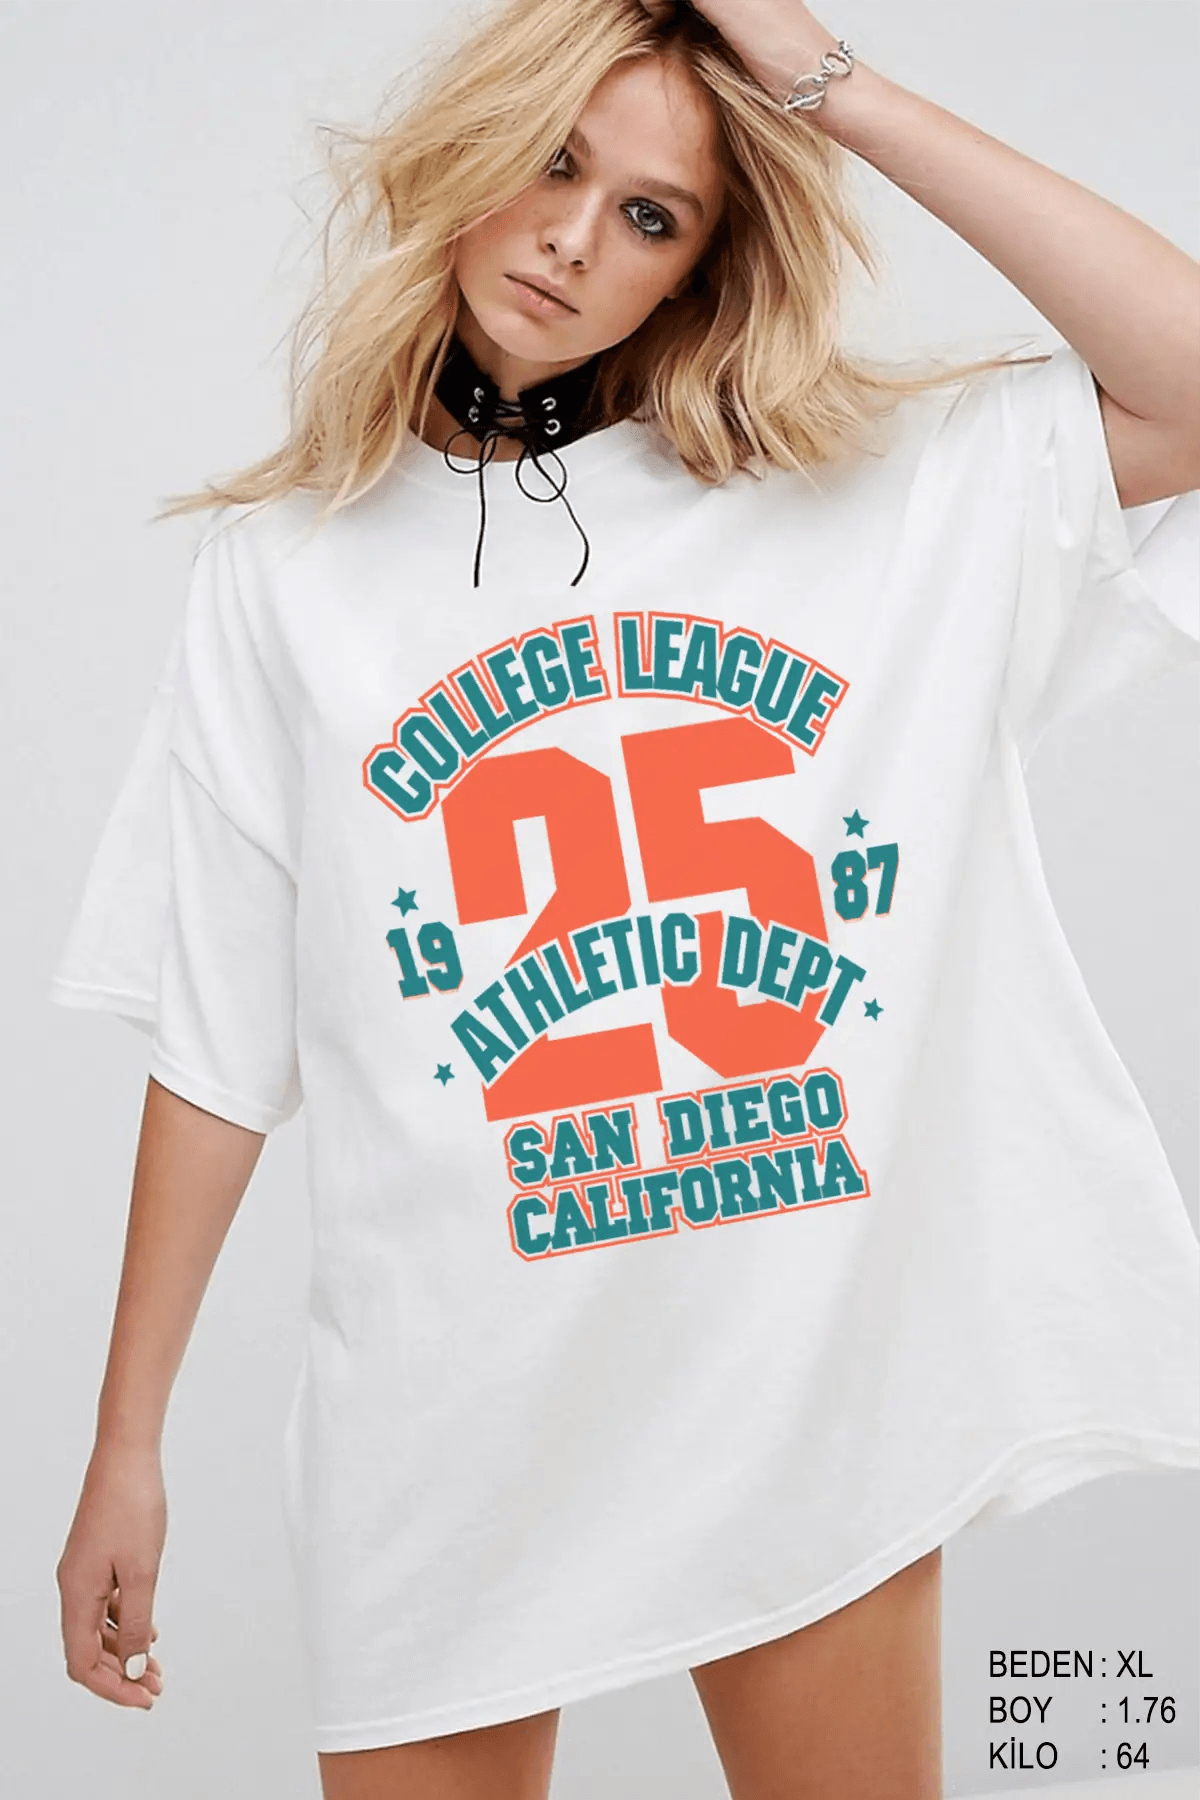 College League Oversize Kadın Tişört - PΛSΛGE